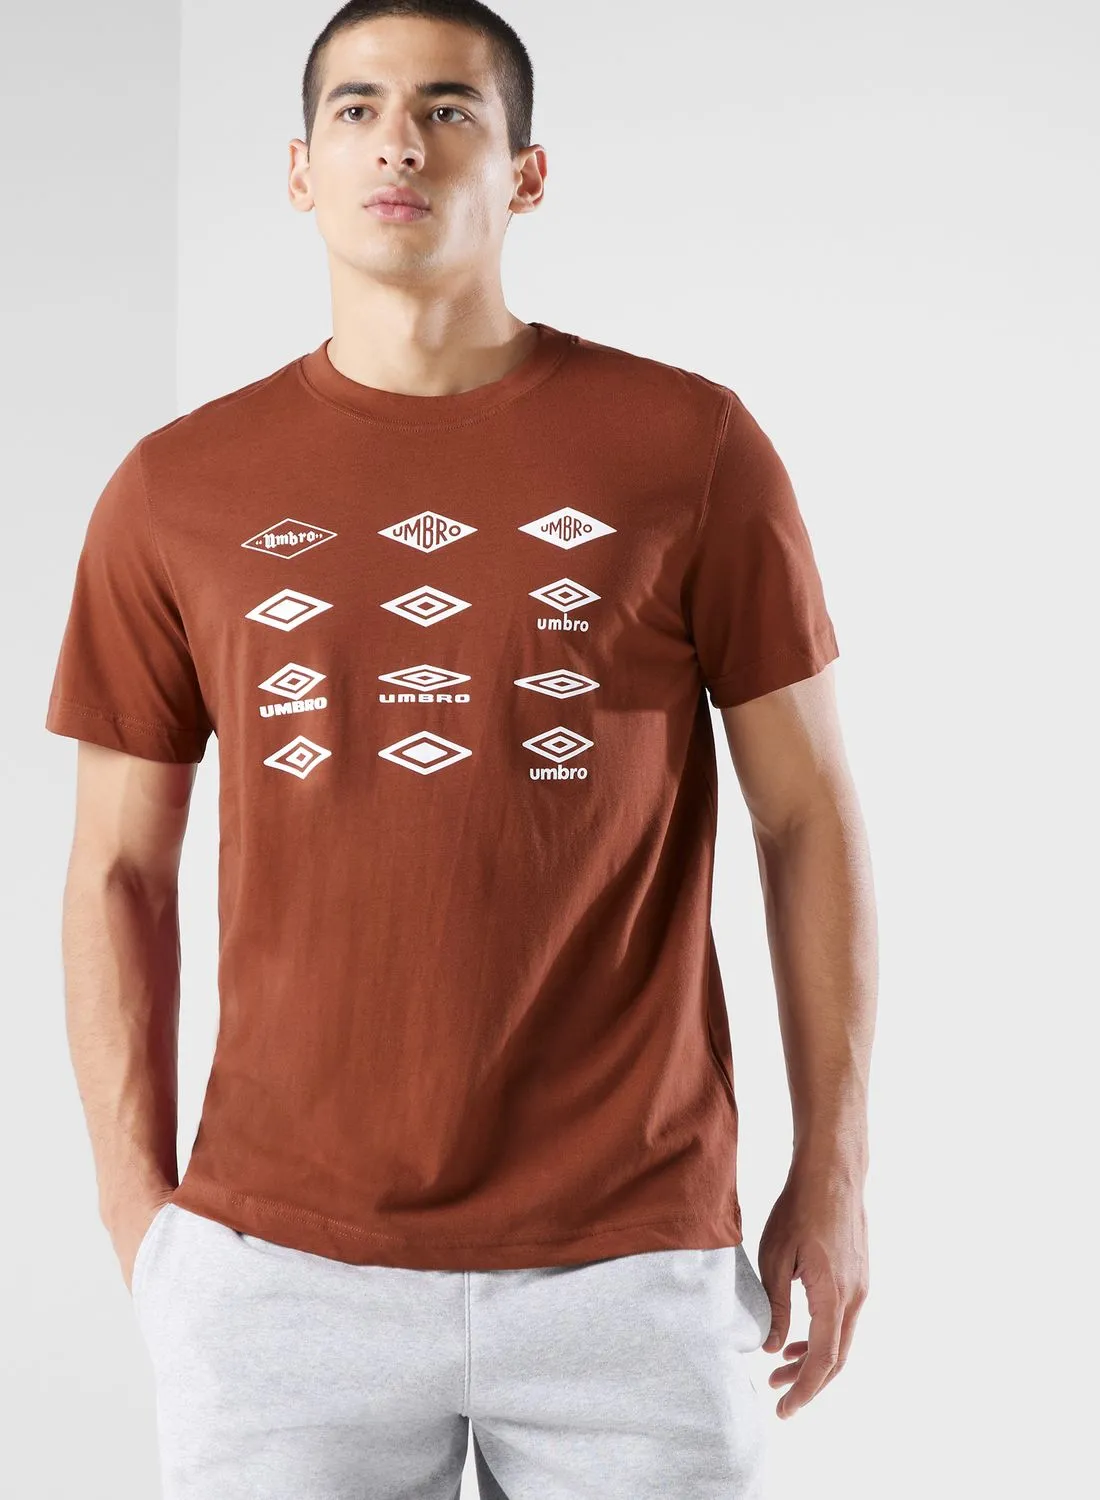 umbro Historic Logos Graphic T-Shirt